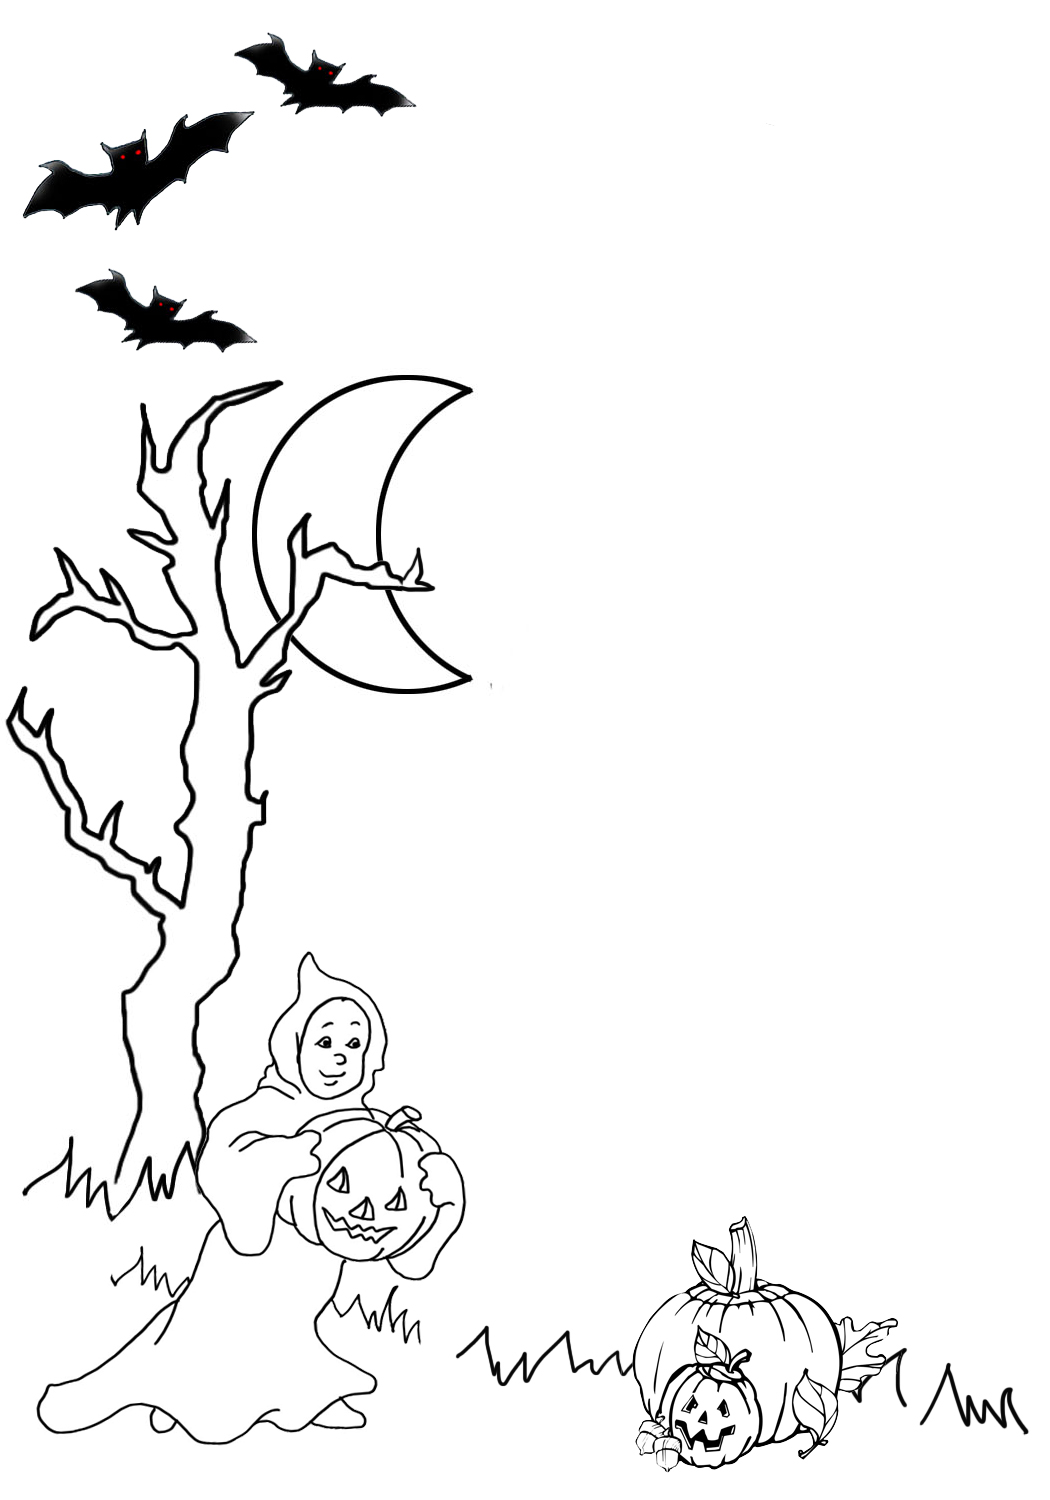 Cute Halloween frame with ghost pumpkin bat tree